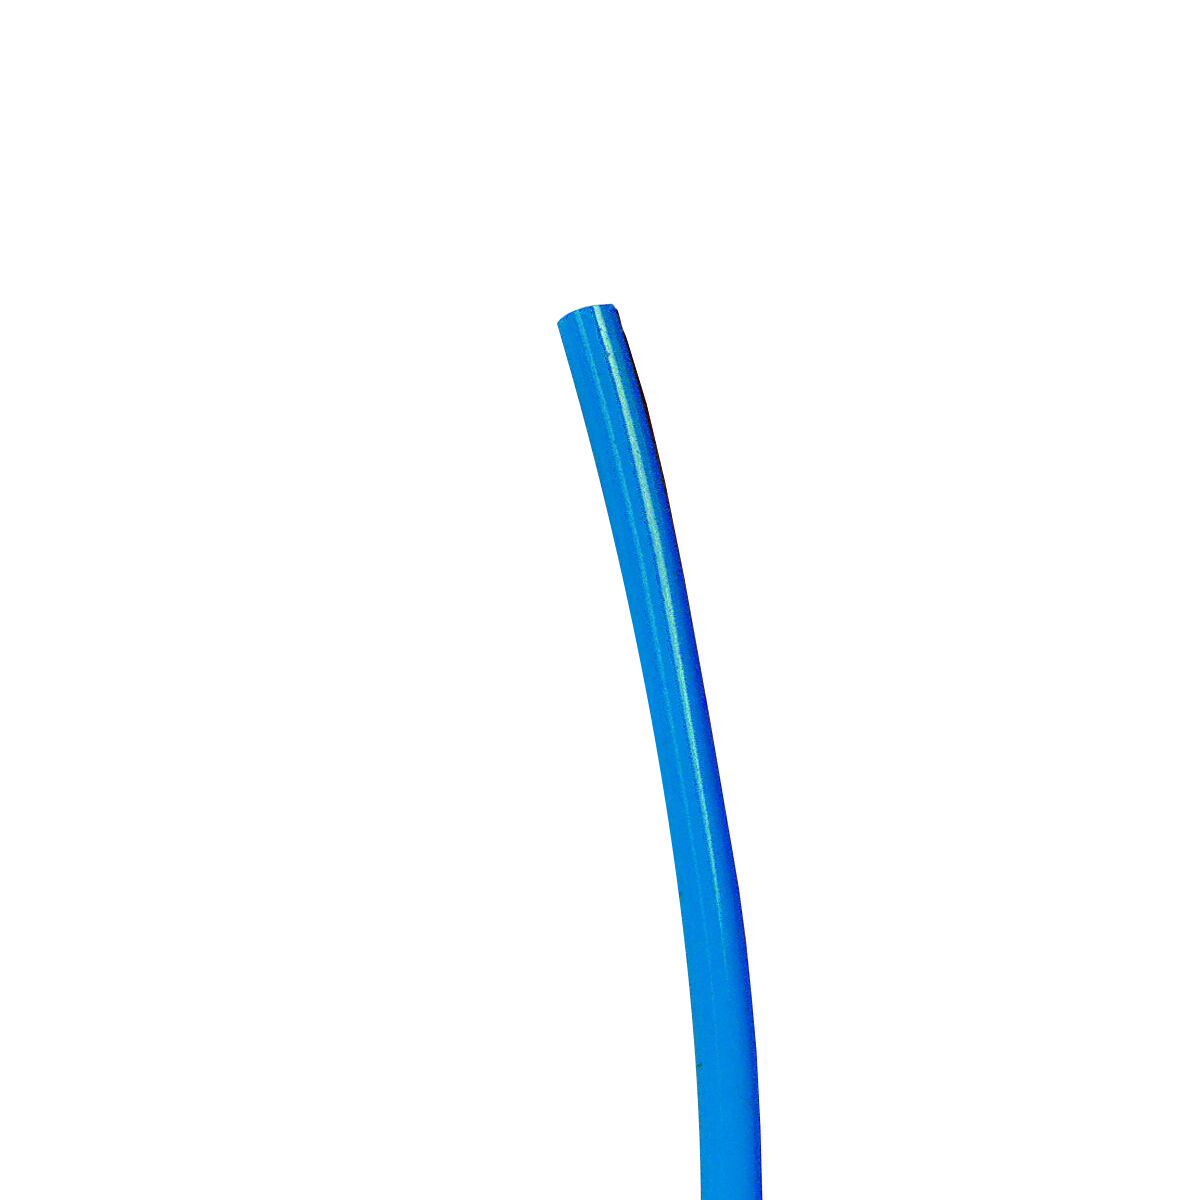 Tuyau en polyuréthane (PUR) bleu / Tuyau Ø extérieur 6 mm / marchandise au mètre